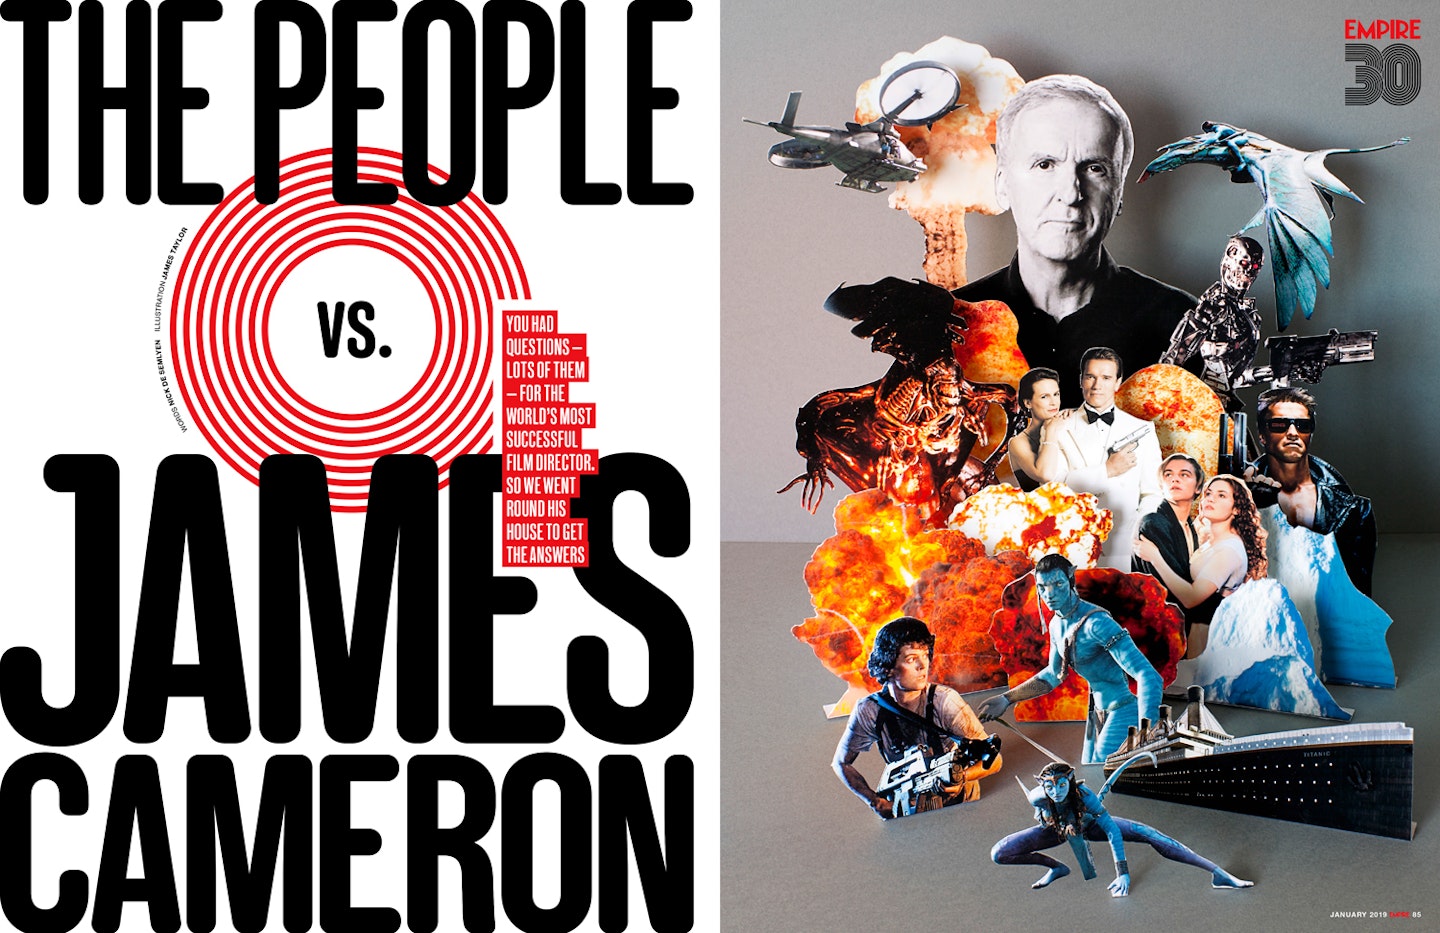 Empire – People vs James Cameron